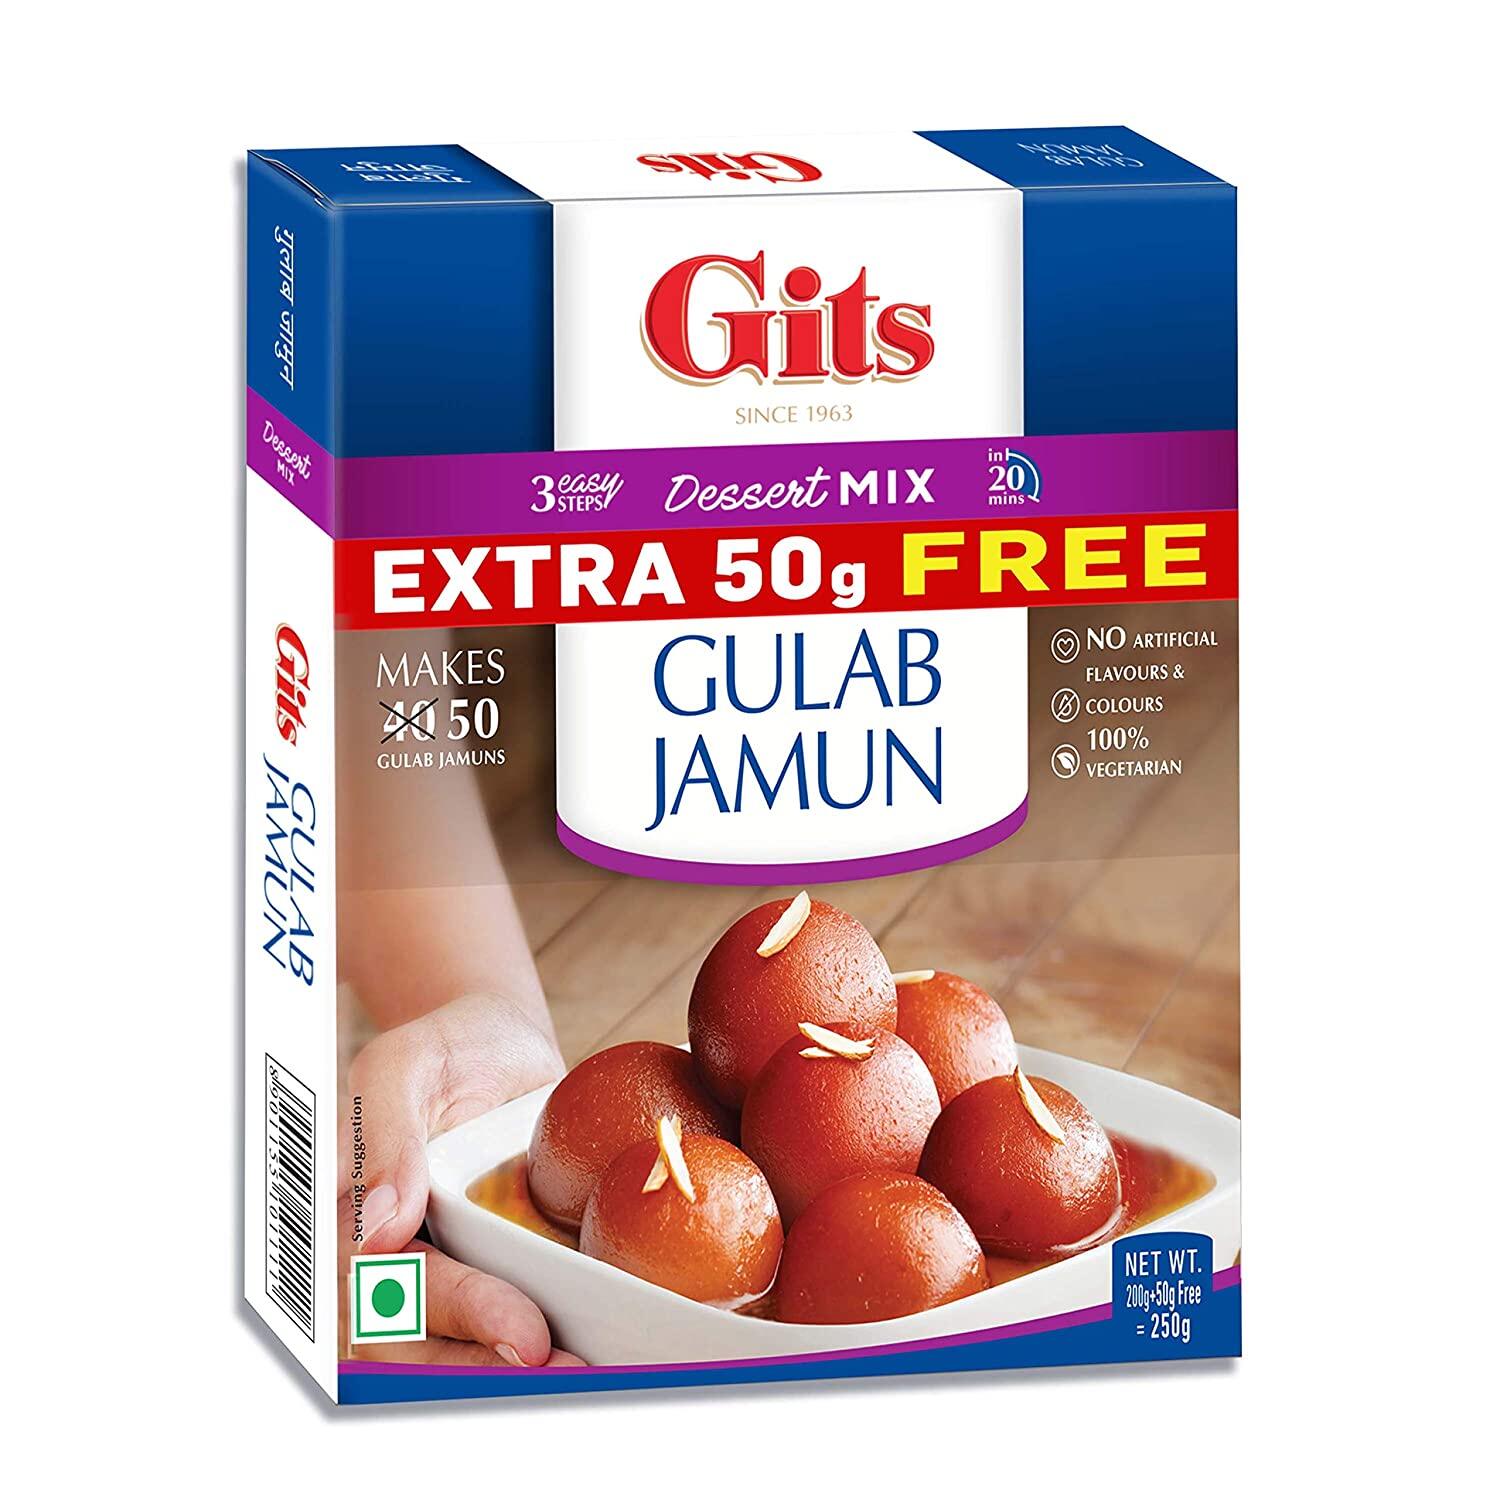 Gits Instant Gulab Jamun Dessert Mix 250g กุหลาบ จามูน มิกซ์